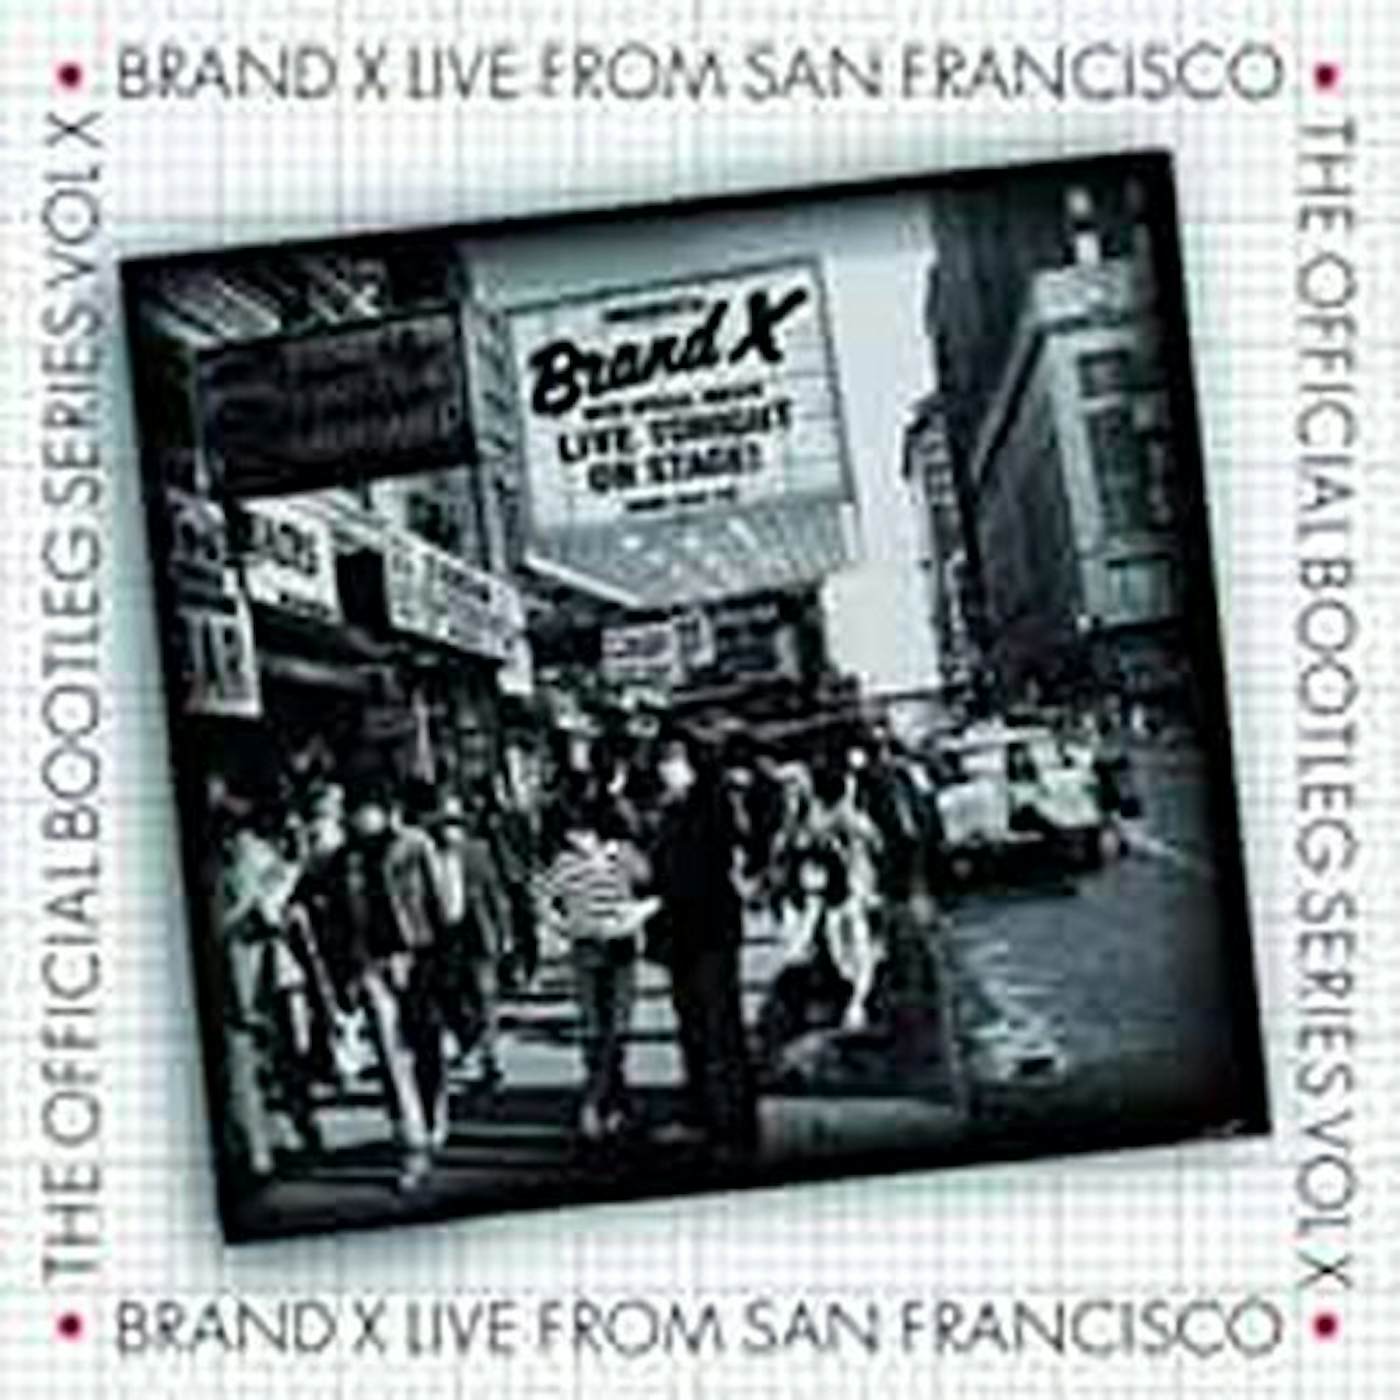 Brand X SAN FRANCISCO CD